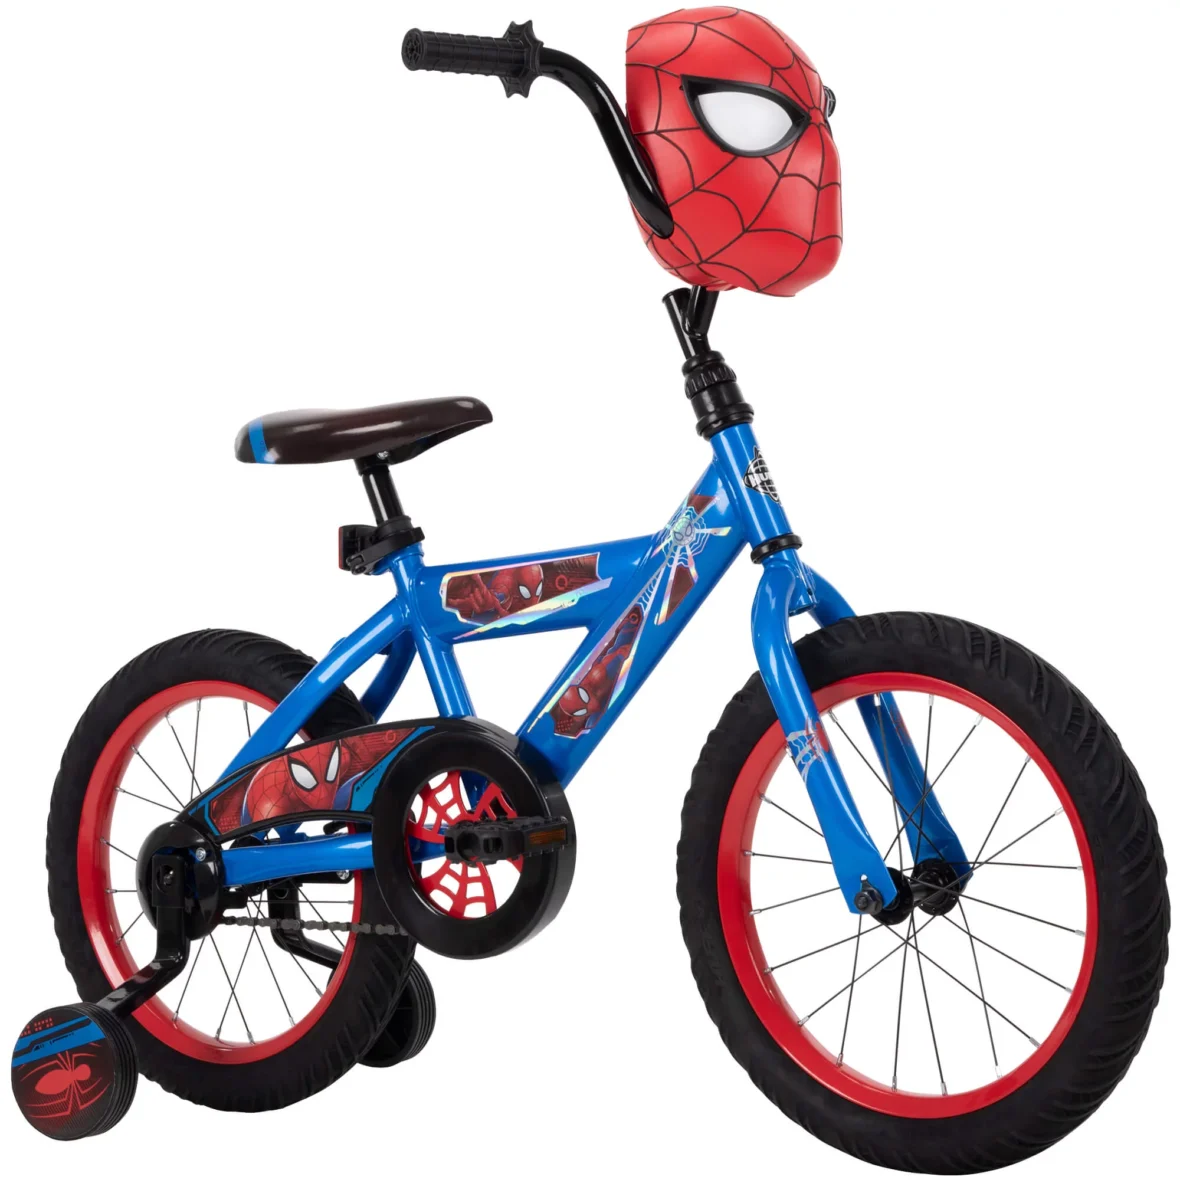 16″ Marvel Spider-Man Bike for Boys’ by Huffy